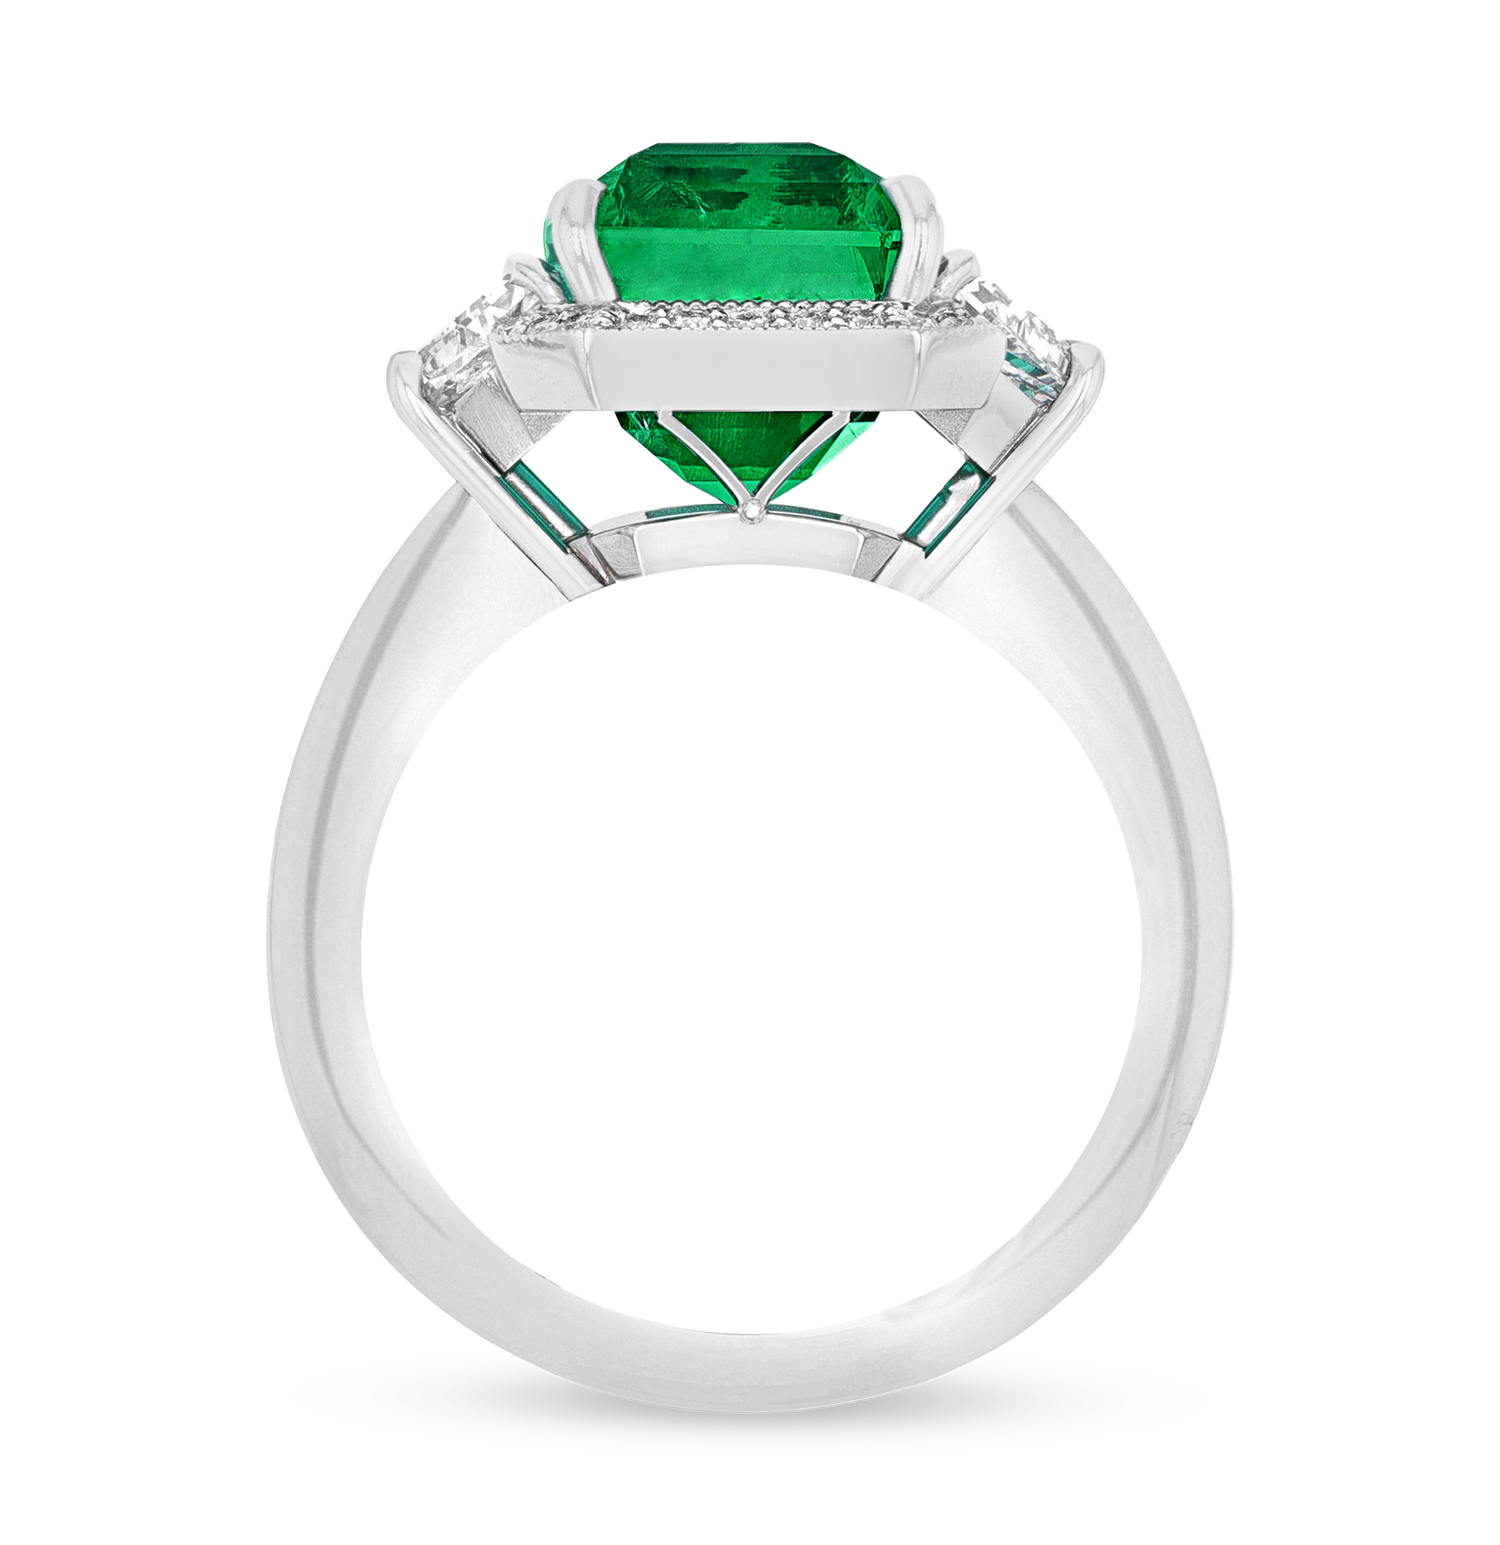 Natural Colombian Emerald Ring, 5.46 carats